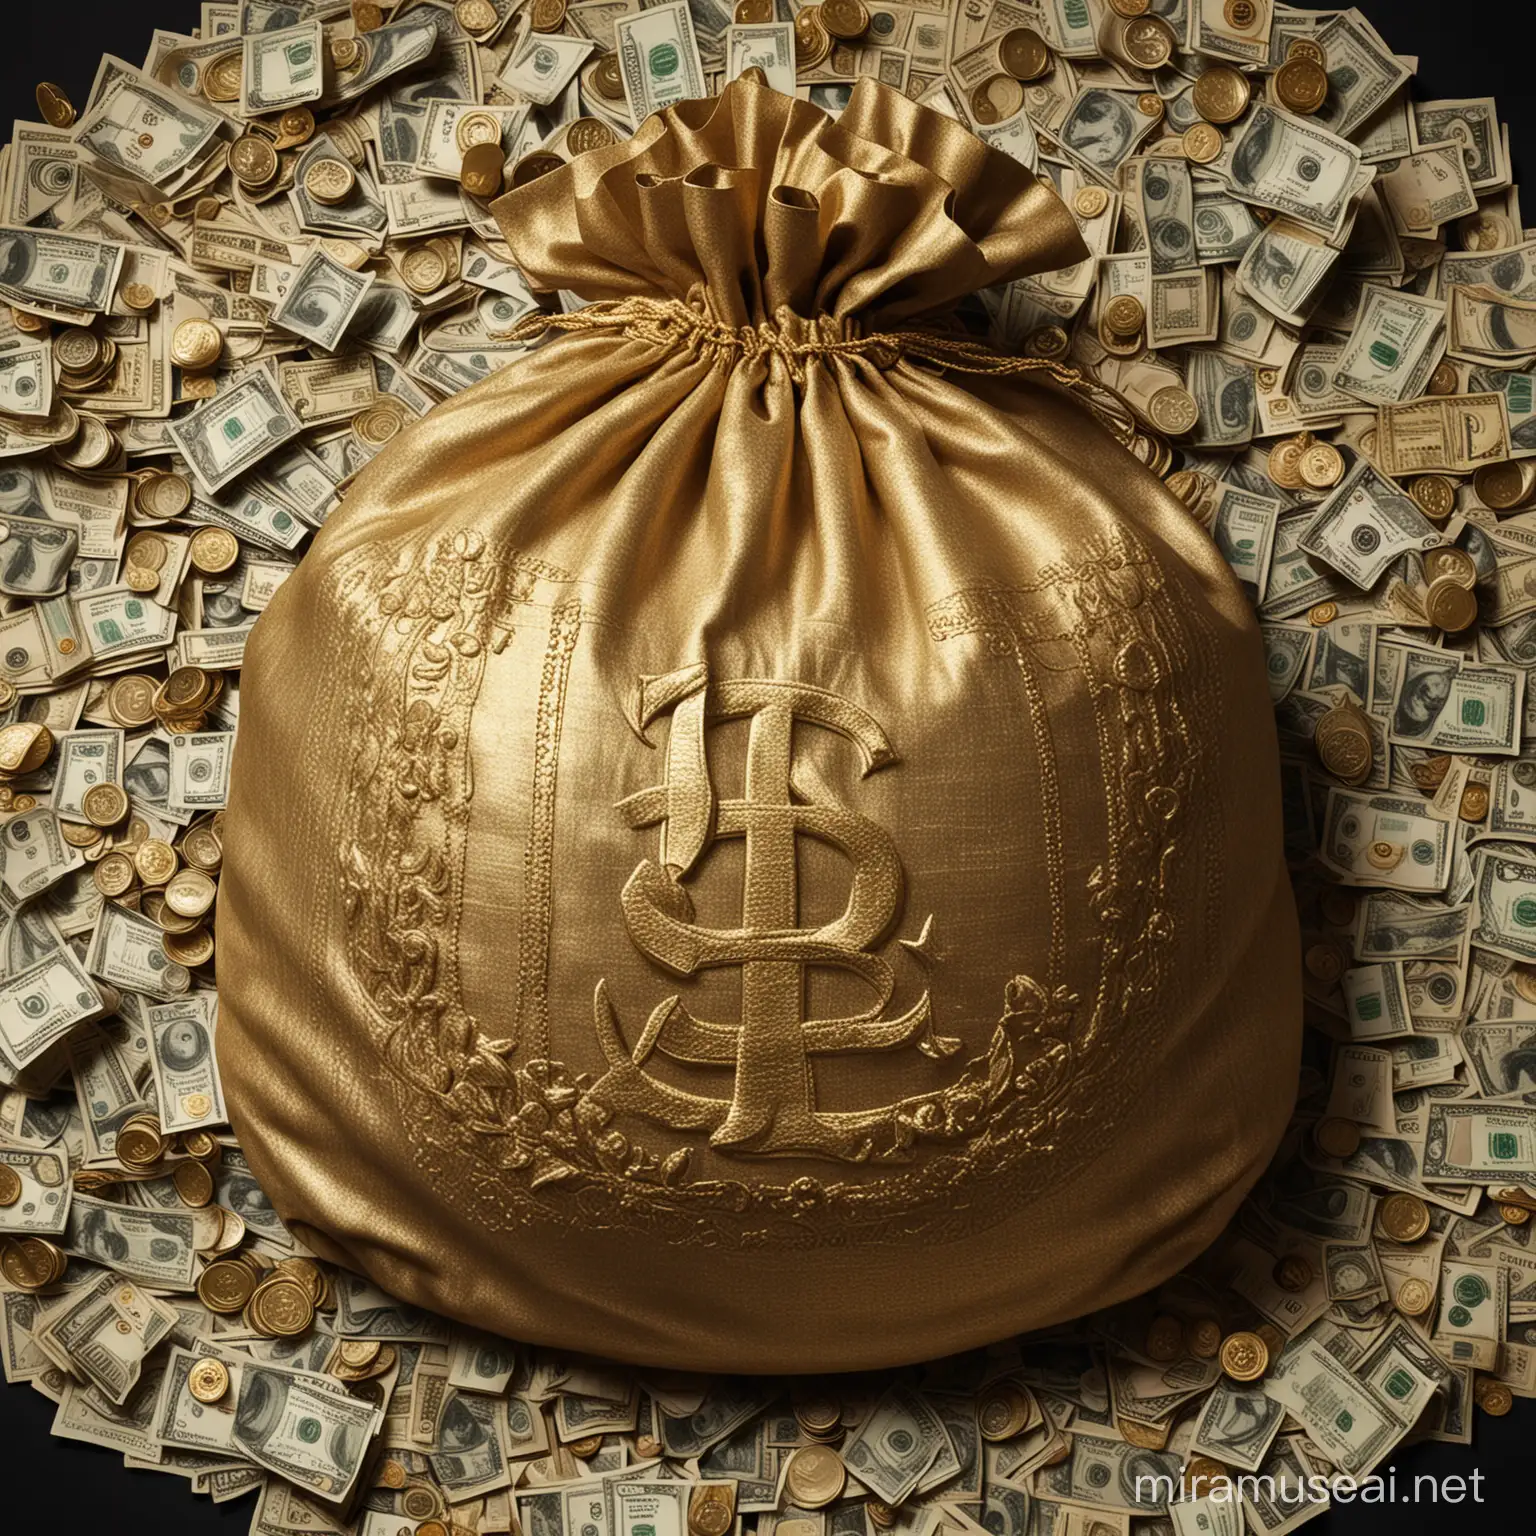 Opulent Sack Overflowing with Wealth Golden Hue and Crisp Dollar Bills